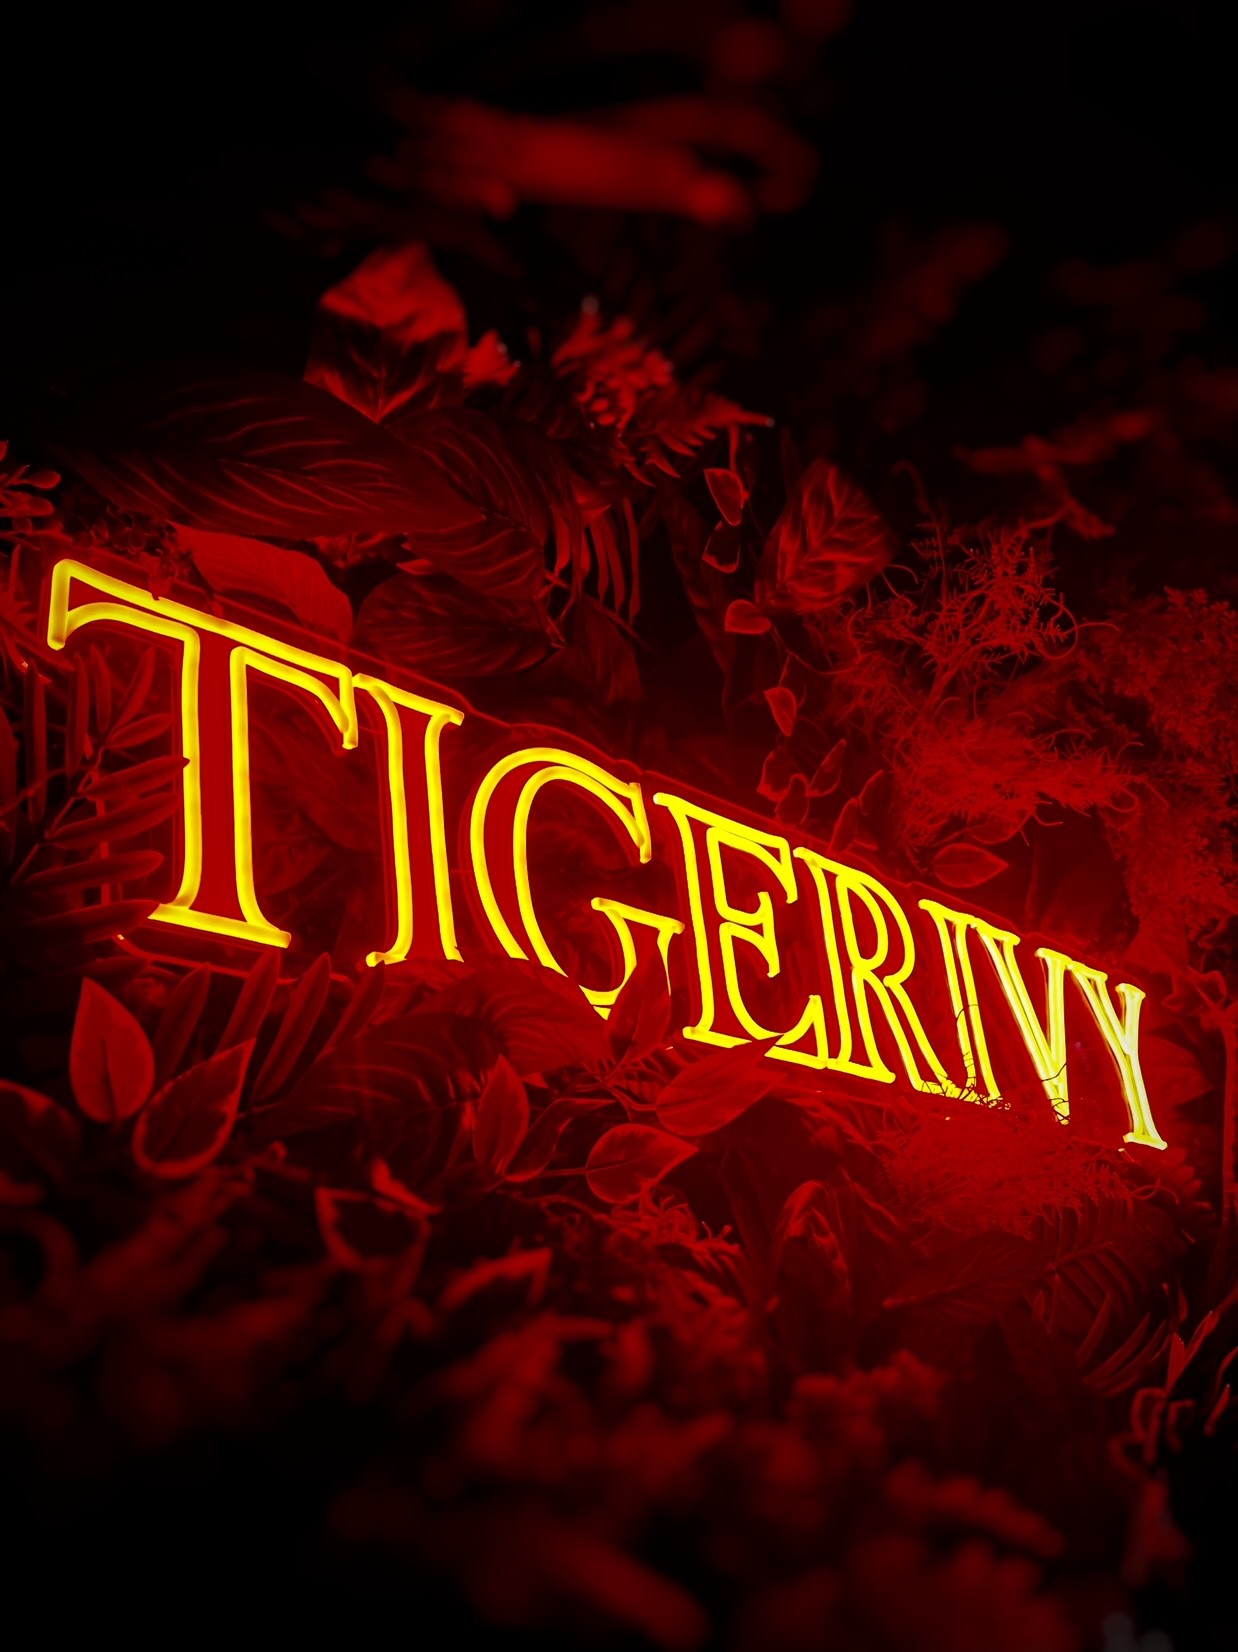 TigerIvy features Instagrammable décor